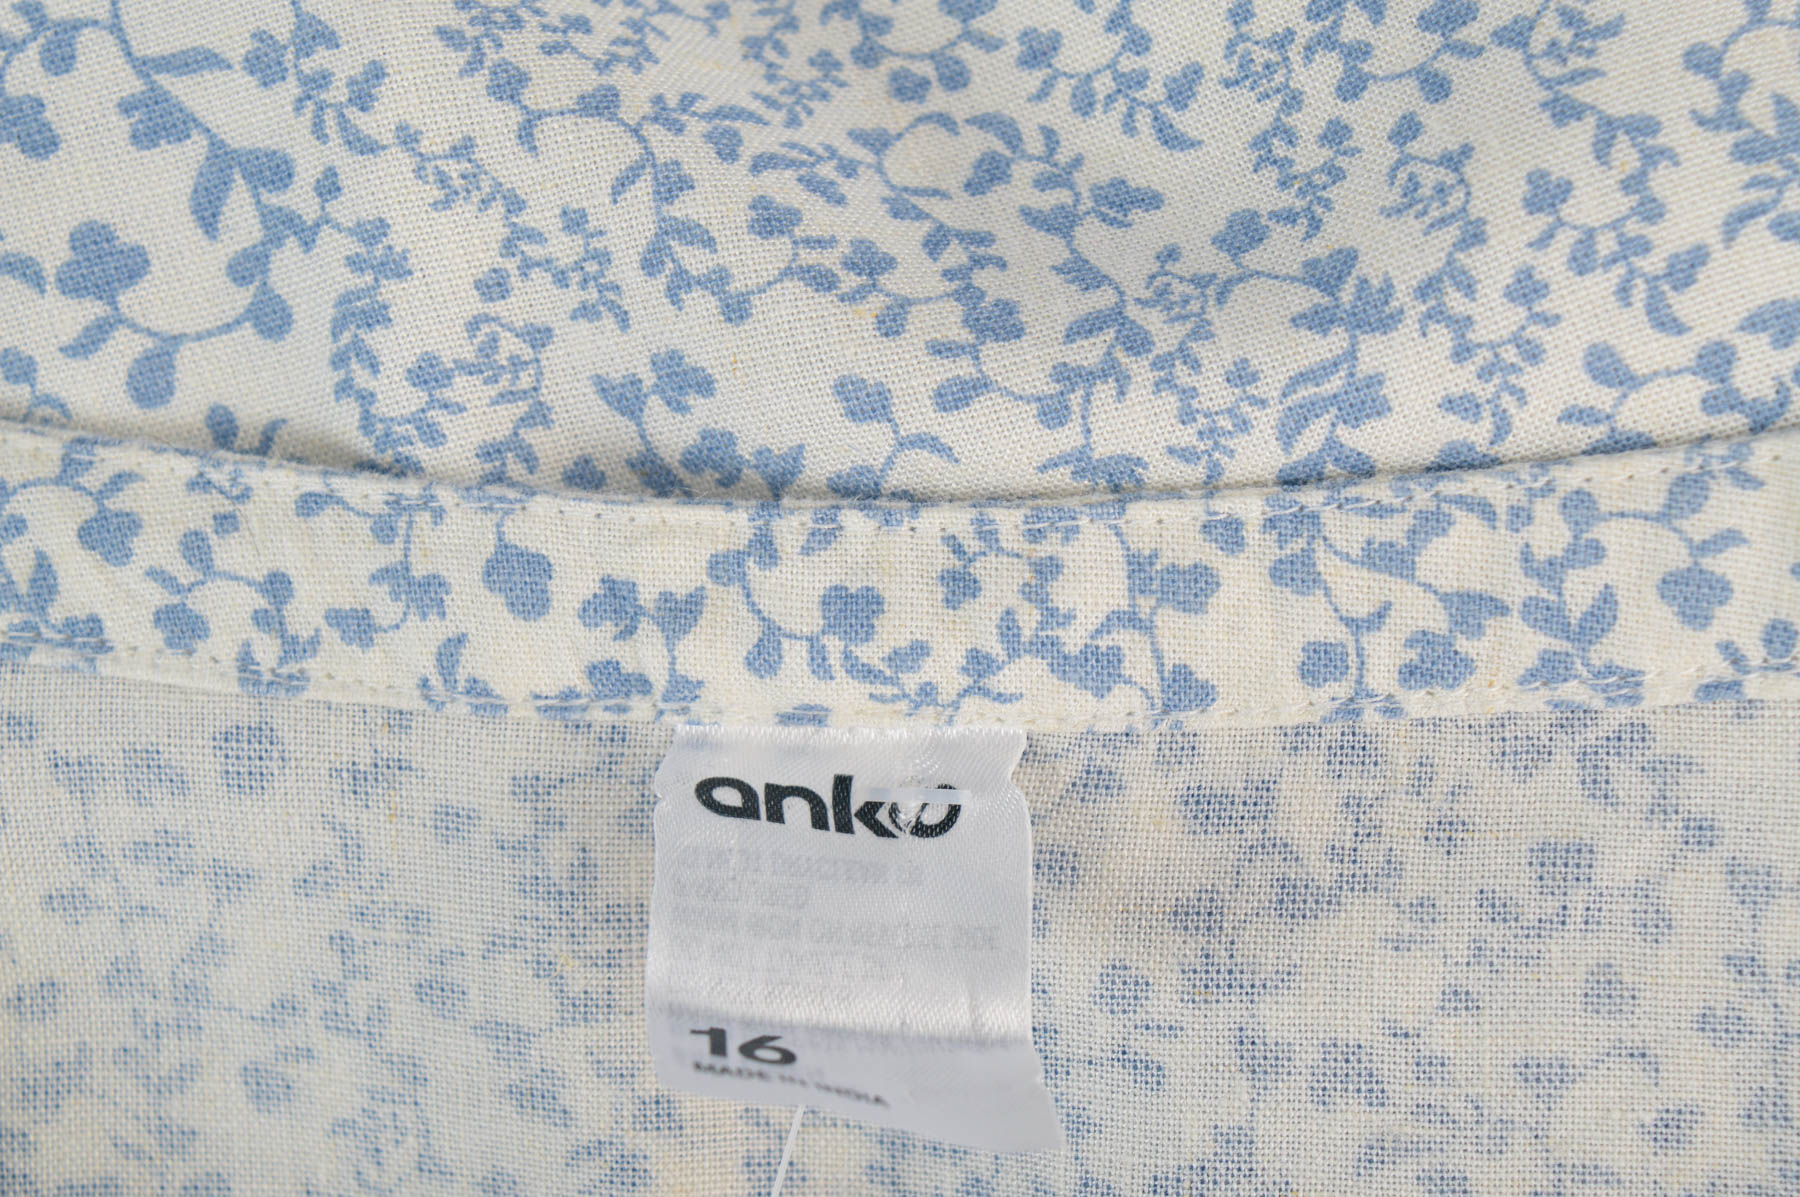 Women's shirt - Anko - 2